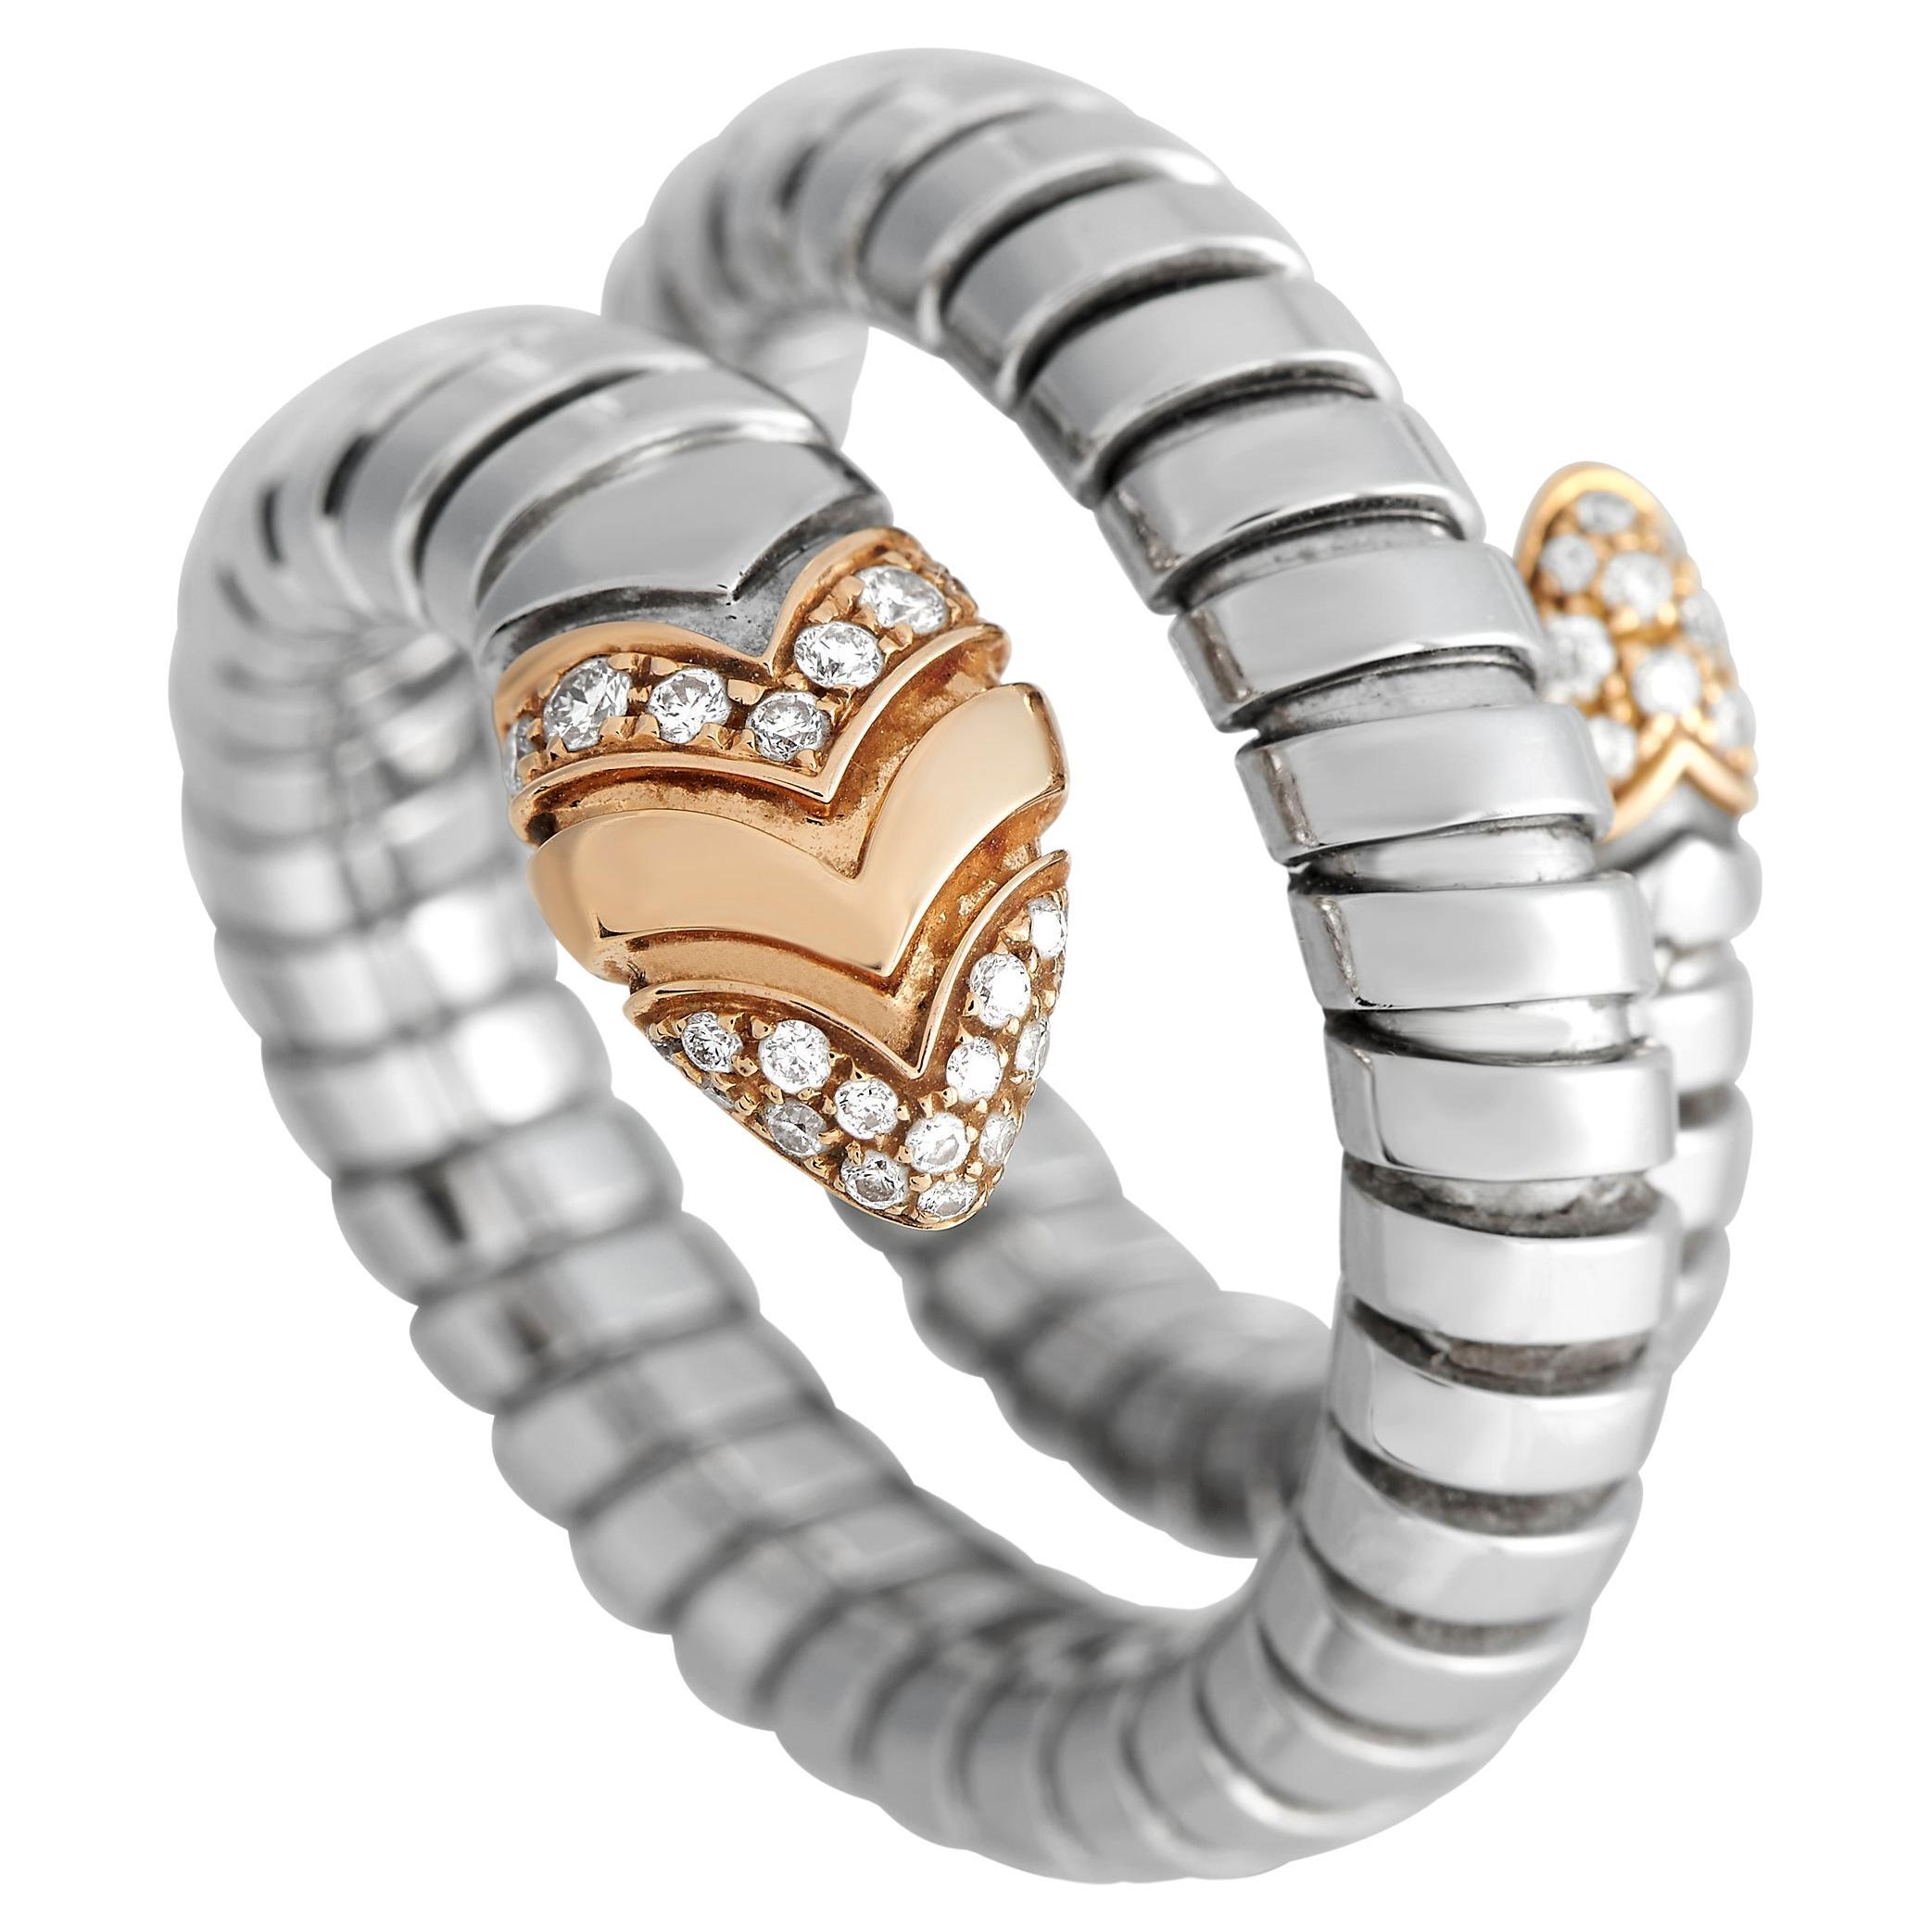 Bvlgari Serpenti Tubogas 18K Rose Gold and Stainless Steel Diamond Ring